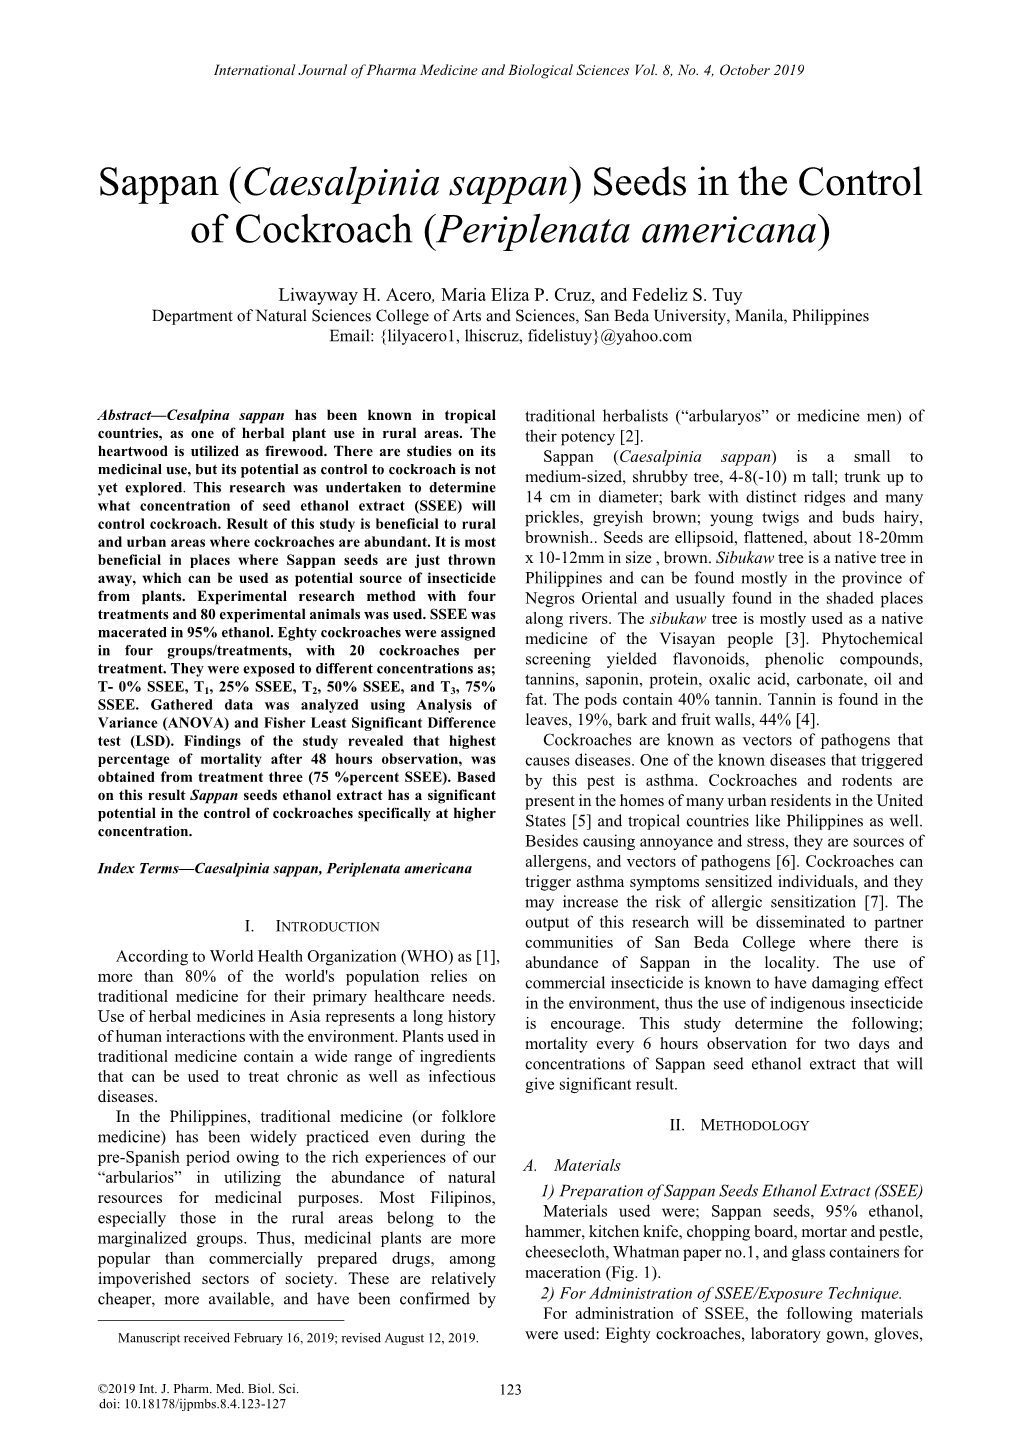 Caesalpinia Sappan) Seeds in the Control of Cockroach (Periplenata Americana